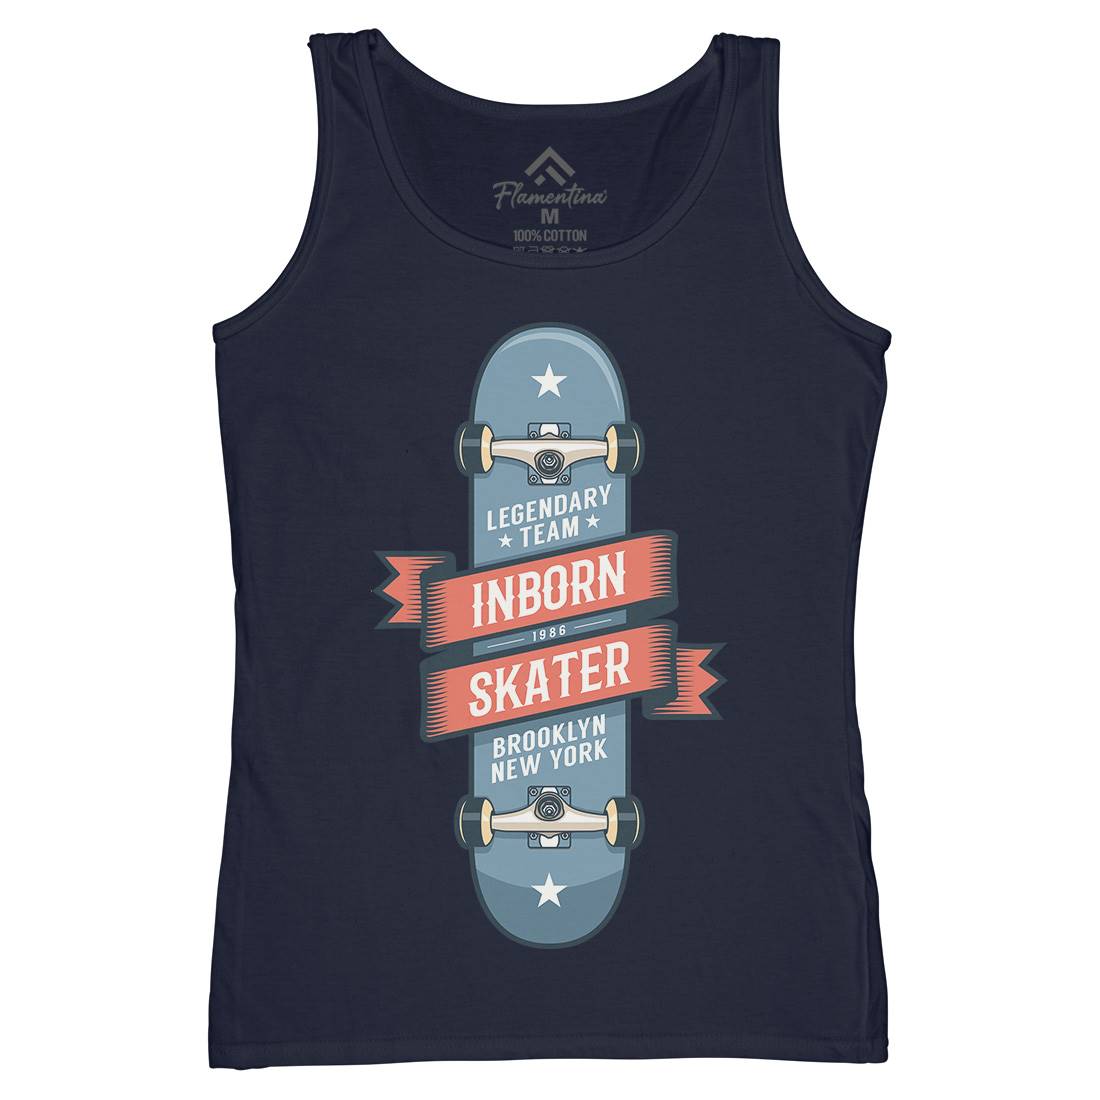 Inborn Skater Womens Organic Tank Top Vest Skate D895